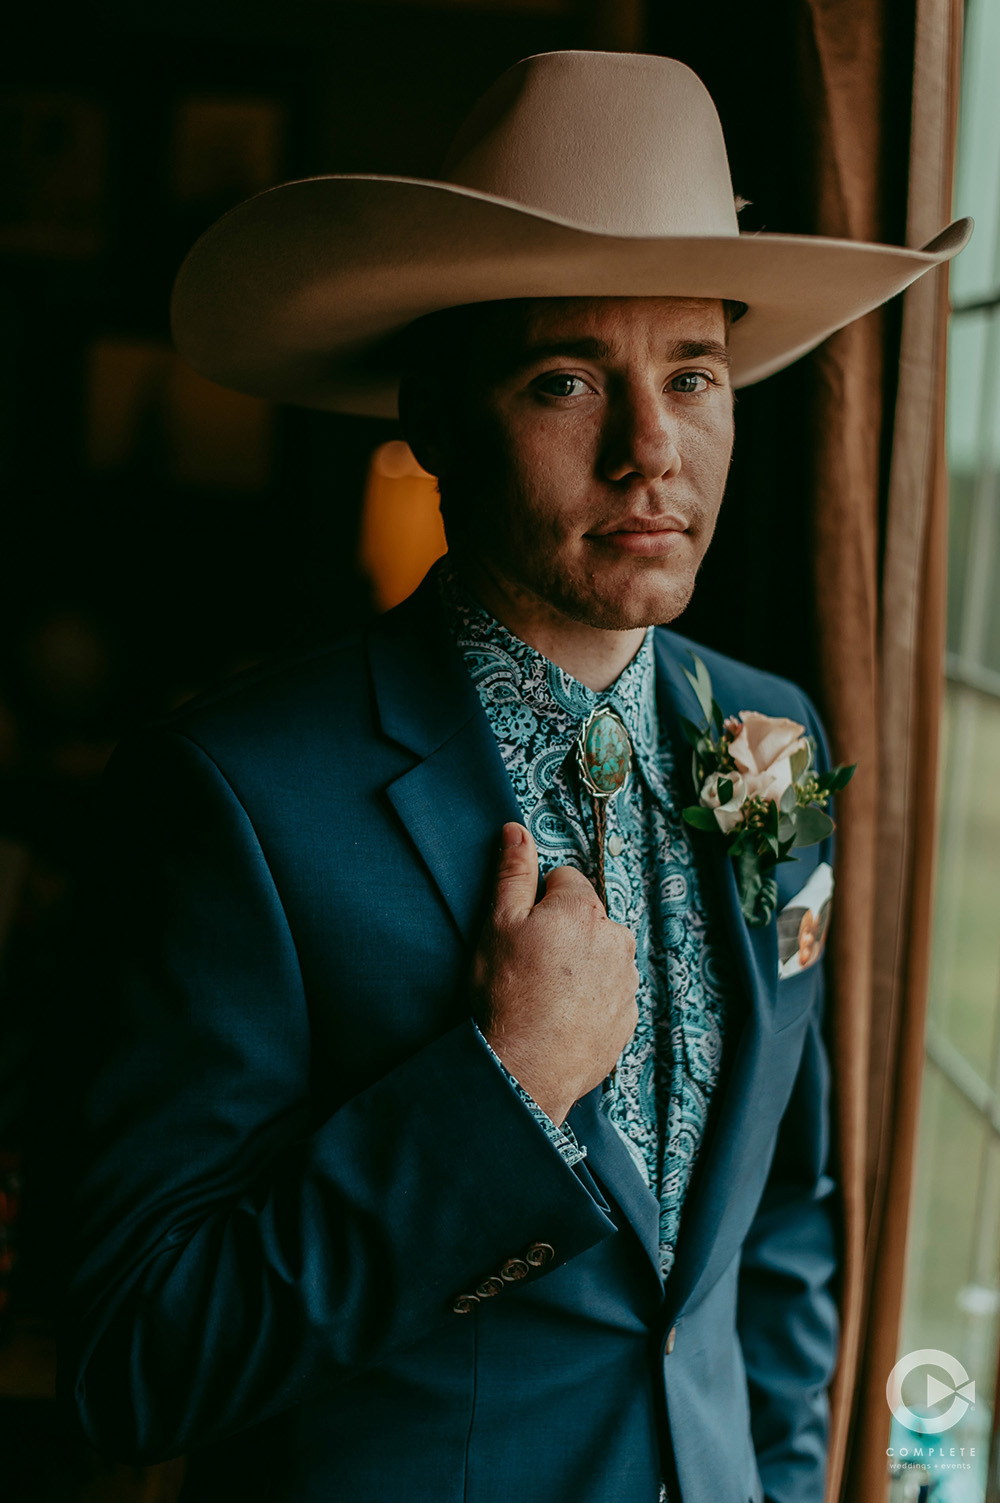 Turquoise wedding cowboy